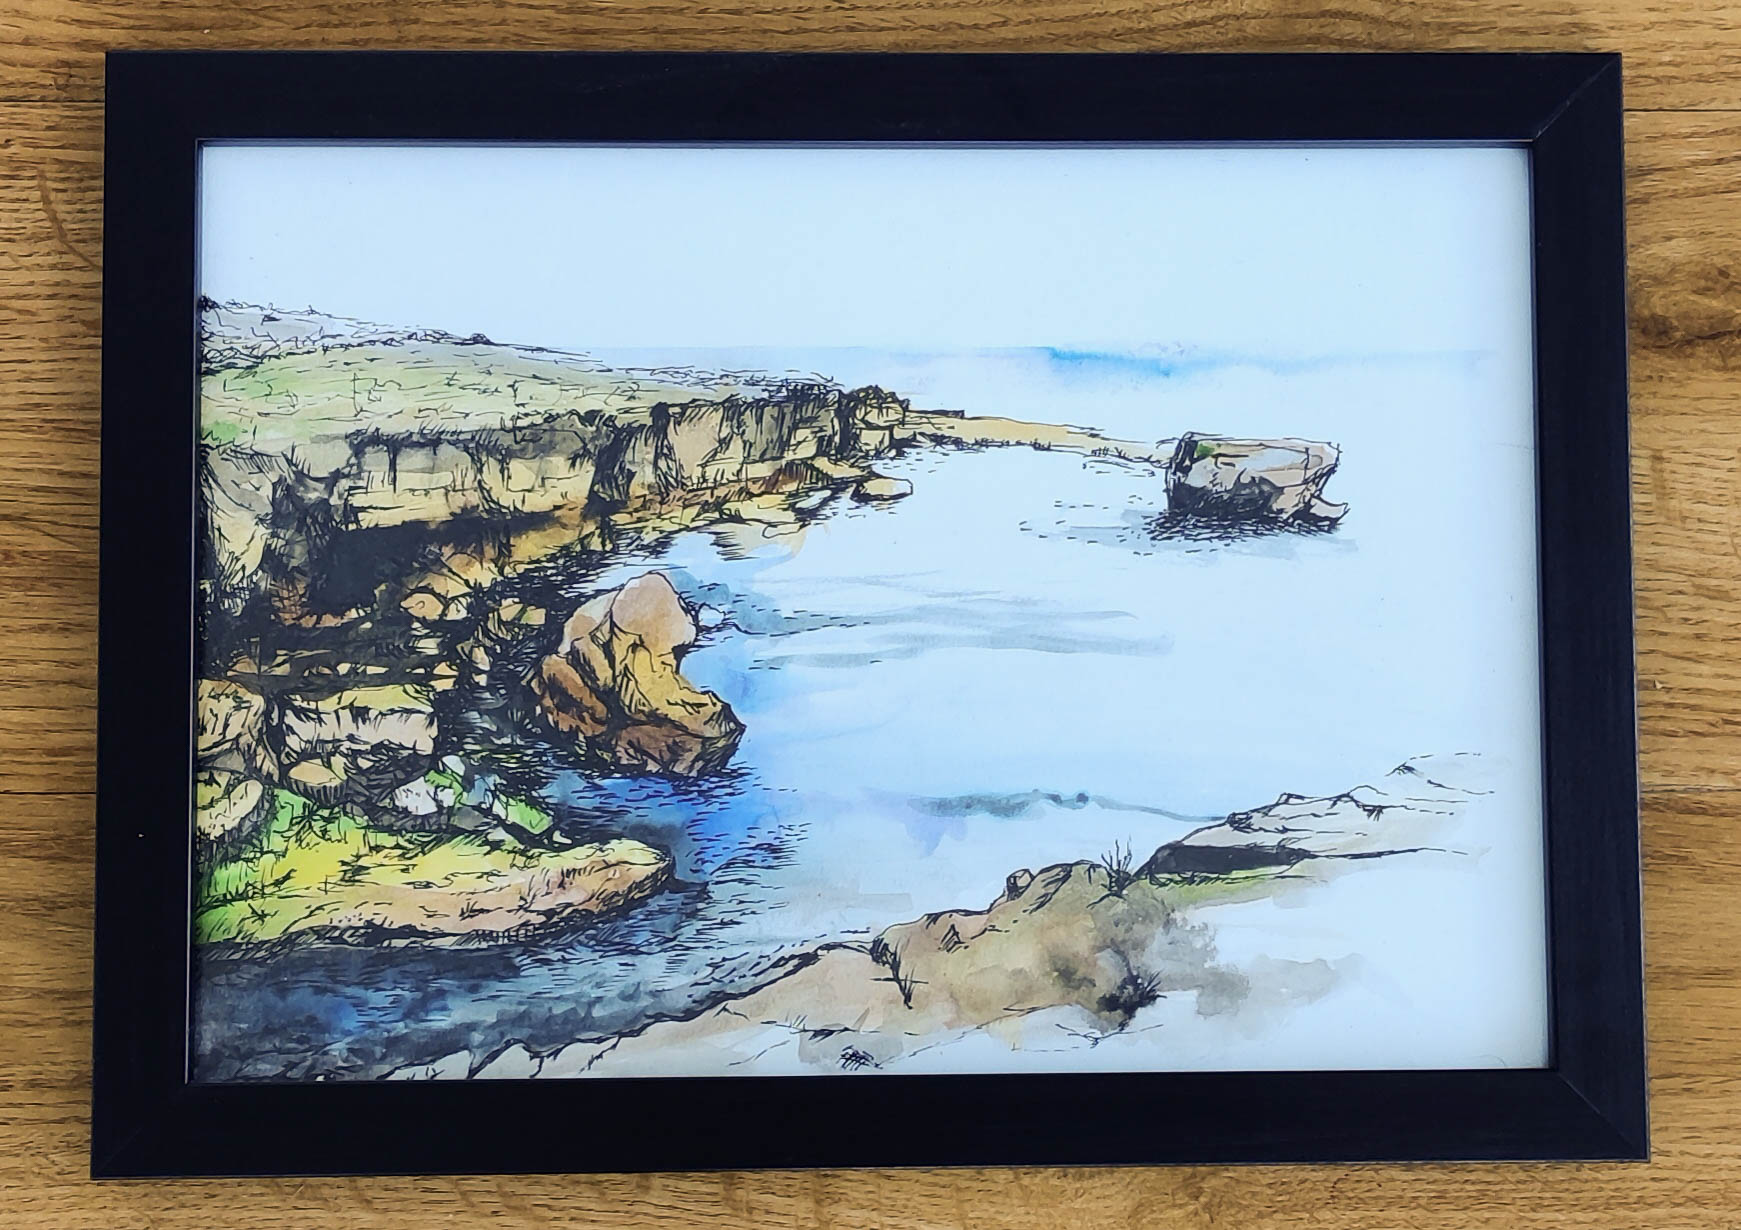 Tin Stanton, "Cornish Coast", ink on card, 25 x 33cm, c. 2020. A small slice of Cornish Coast.